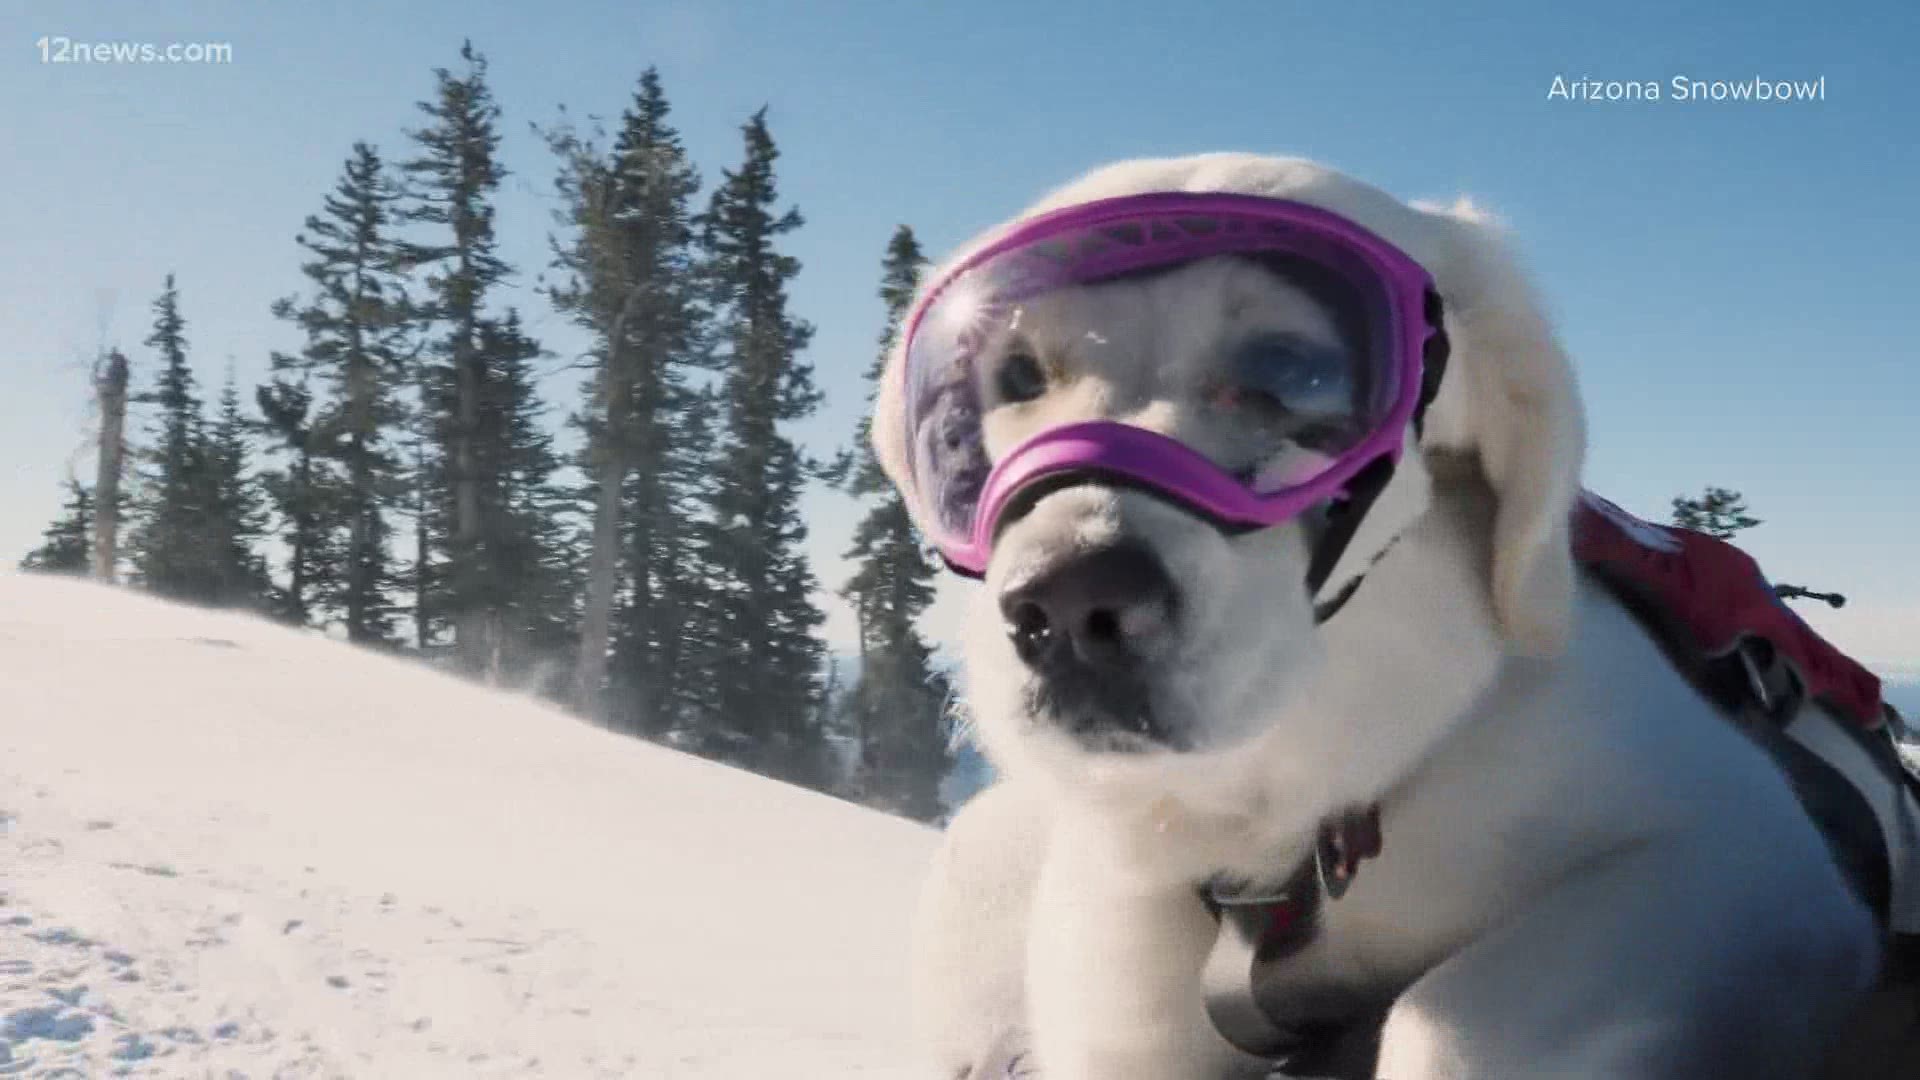 Arizona Snowbowl's avalanche dog is ready for duty